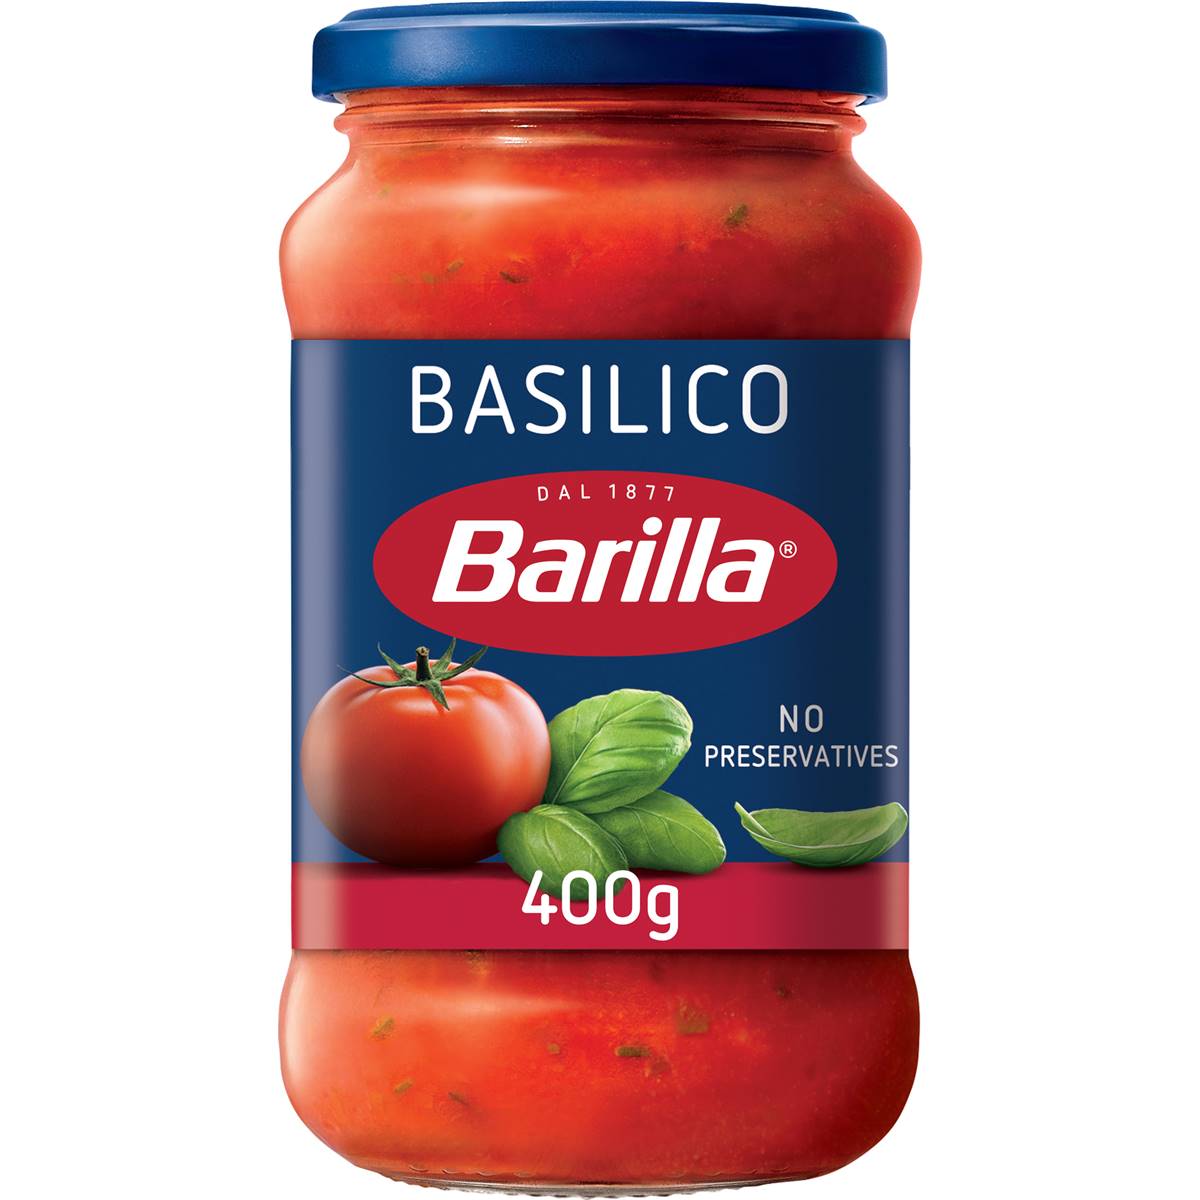 Barilla Pasta Sauce Basilico Tomato Basil